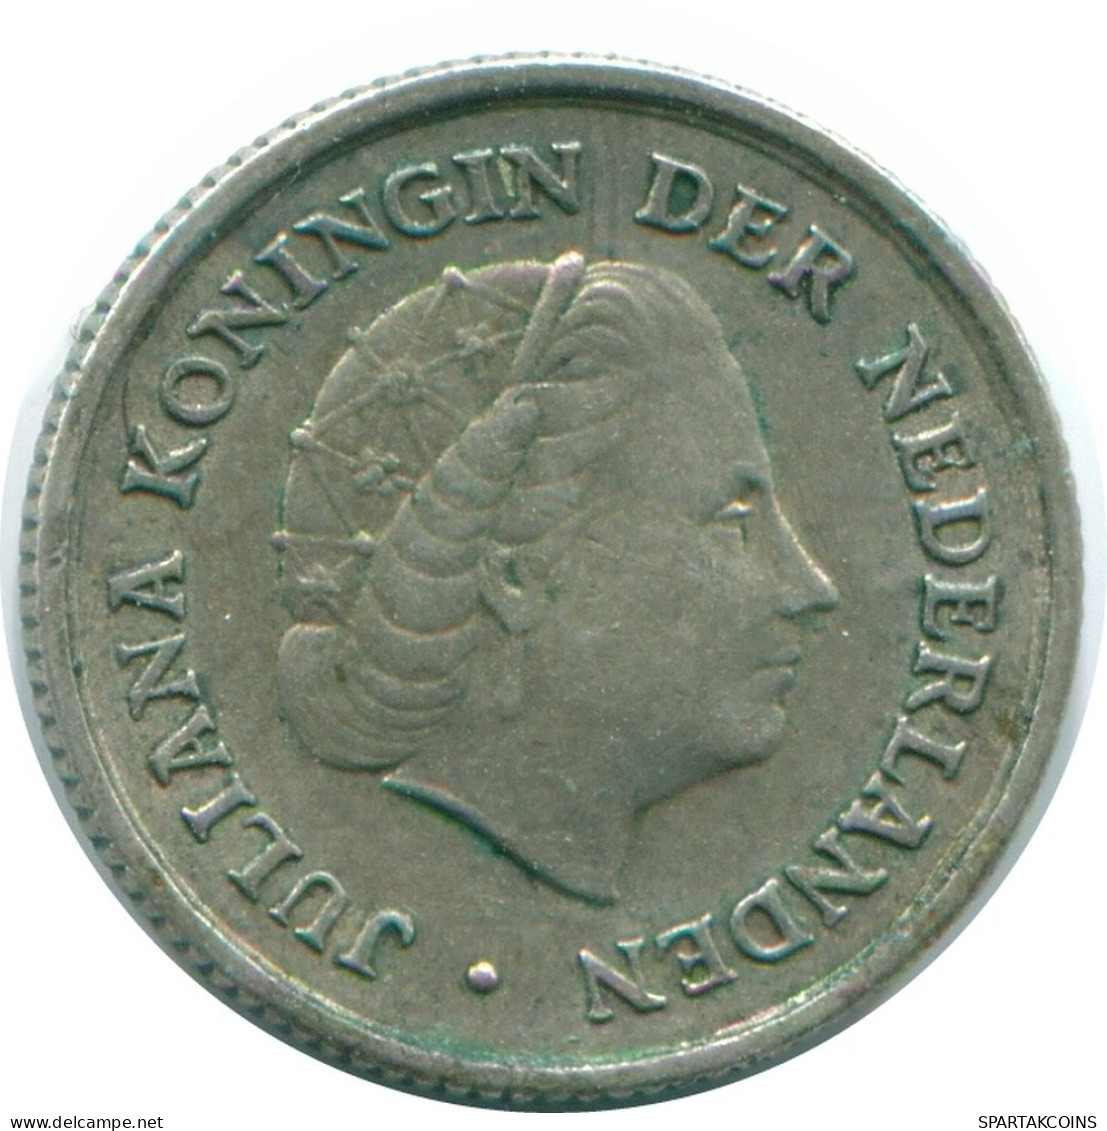 1/10 GULDEN 1963 NETHERLANDS ANTILLES SILVER Colonial Coin #NL12577.3.U.A - Antillas Neerlandesas